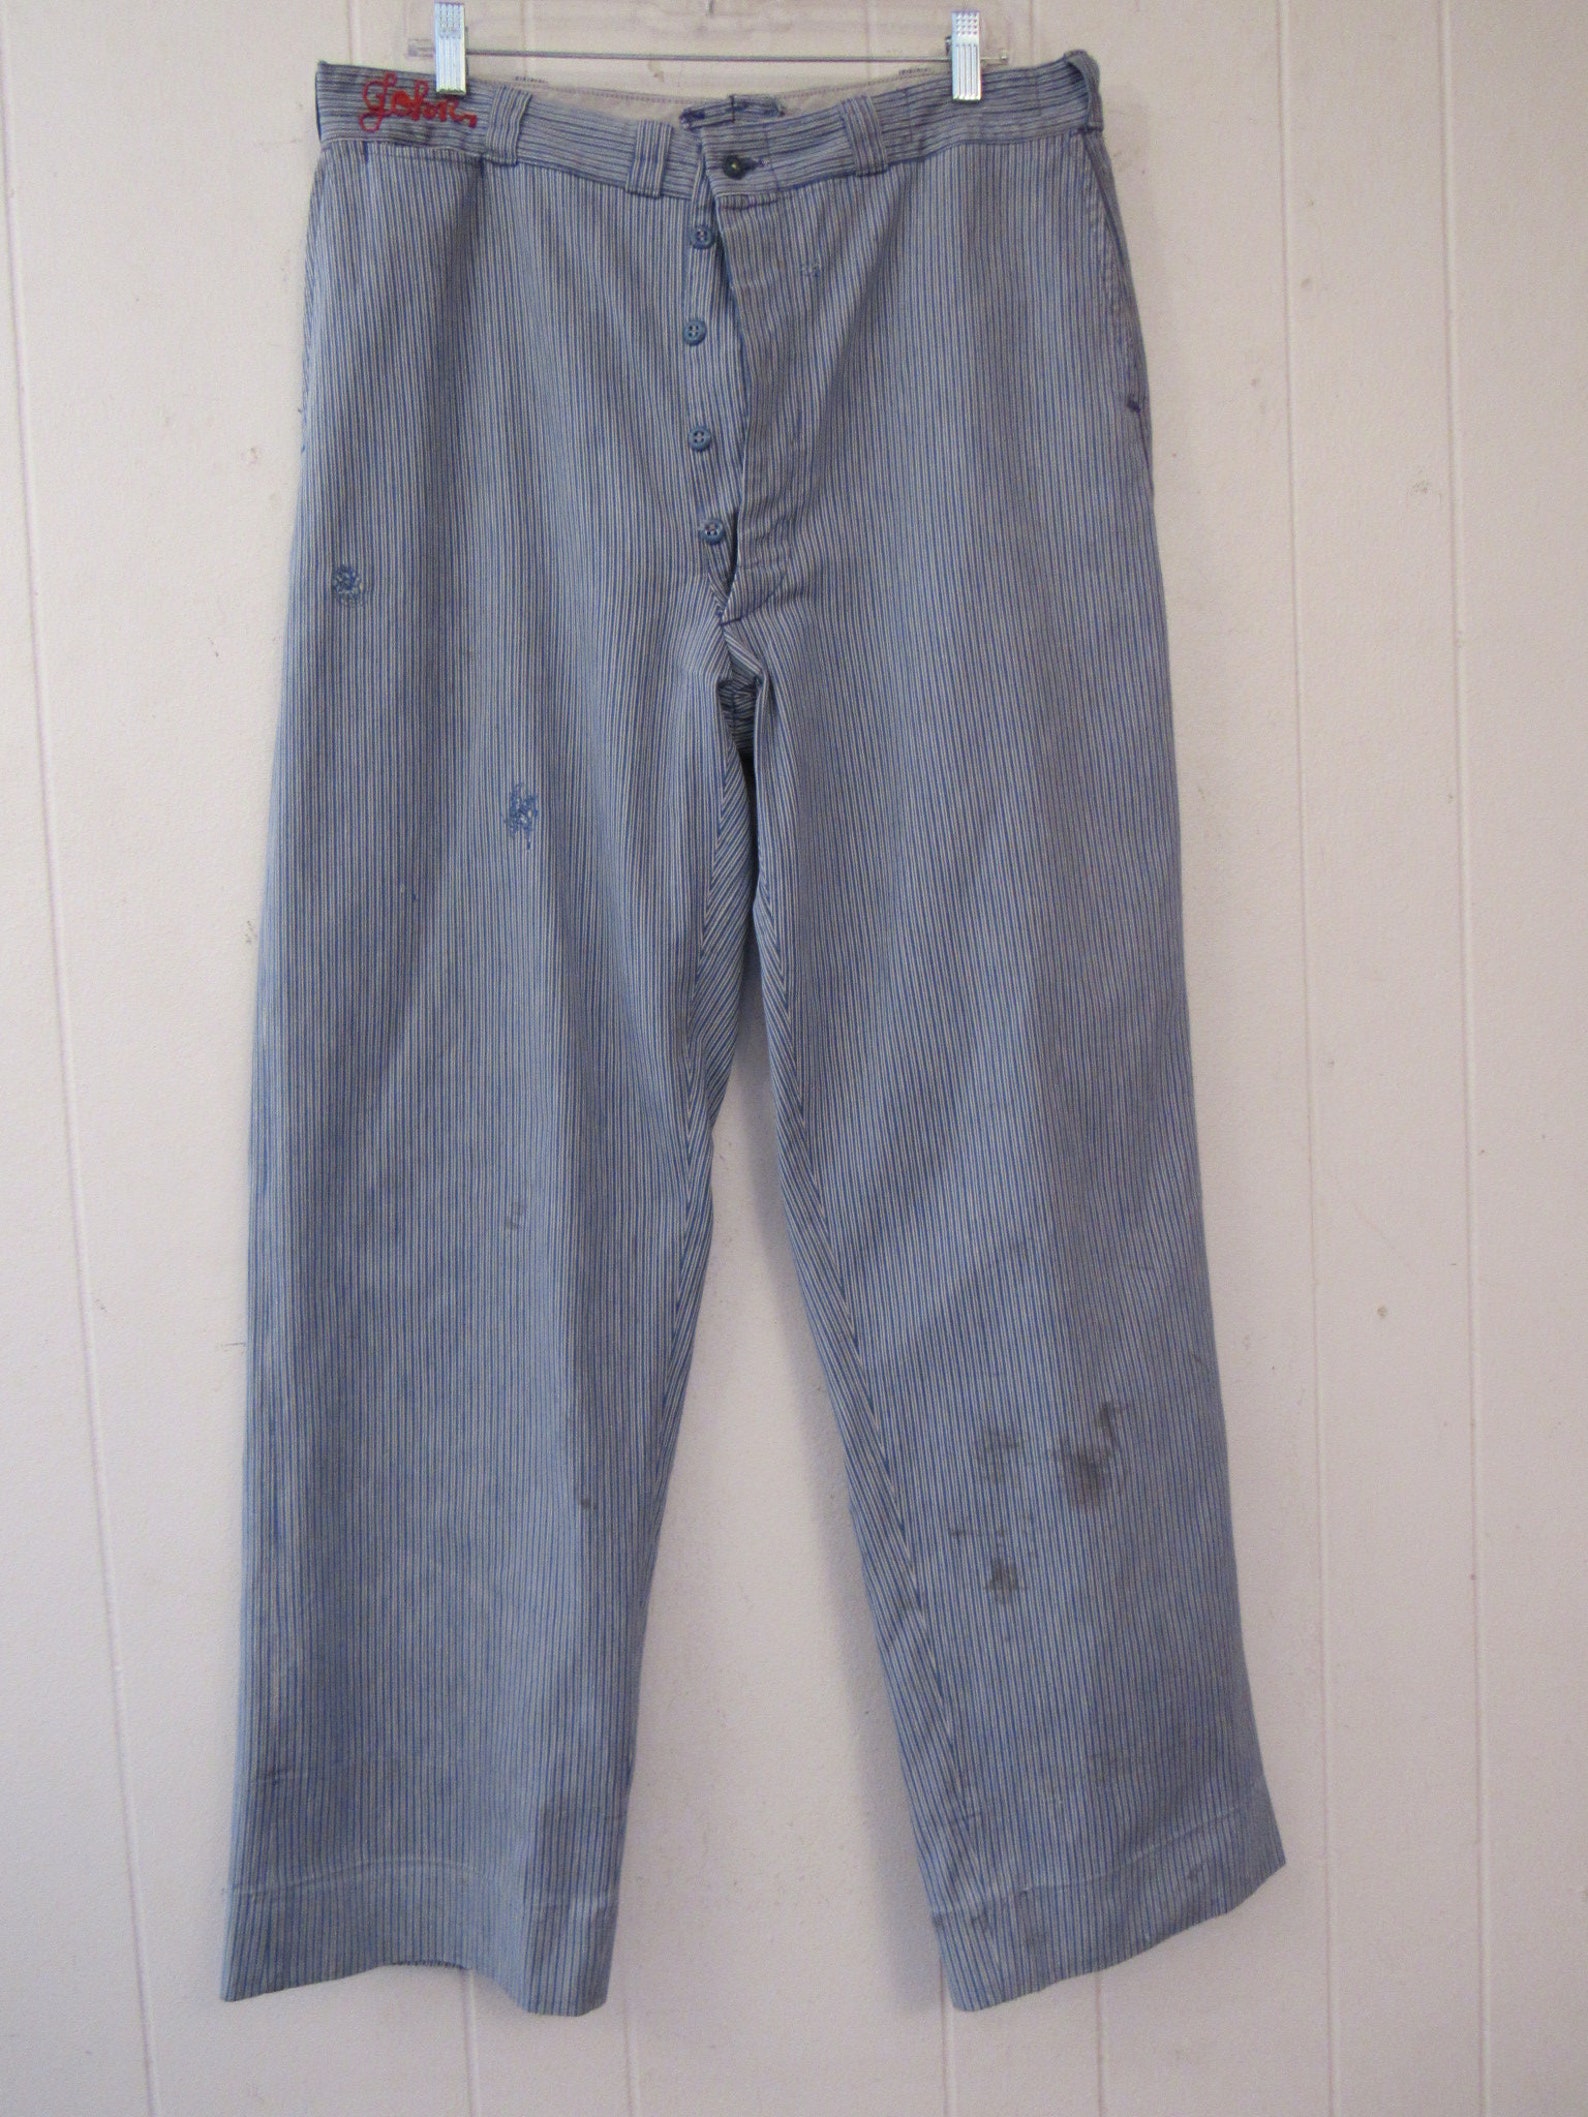 Vintage Work Pants 1930s Pants Striped Denim Pants Vintage - Etsy